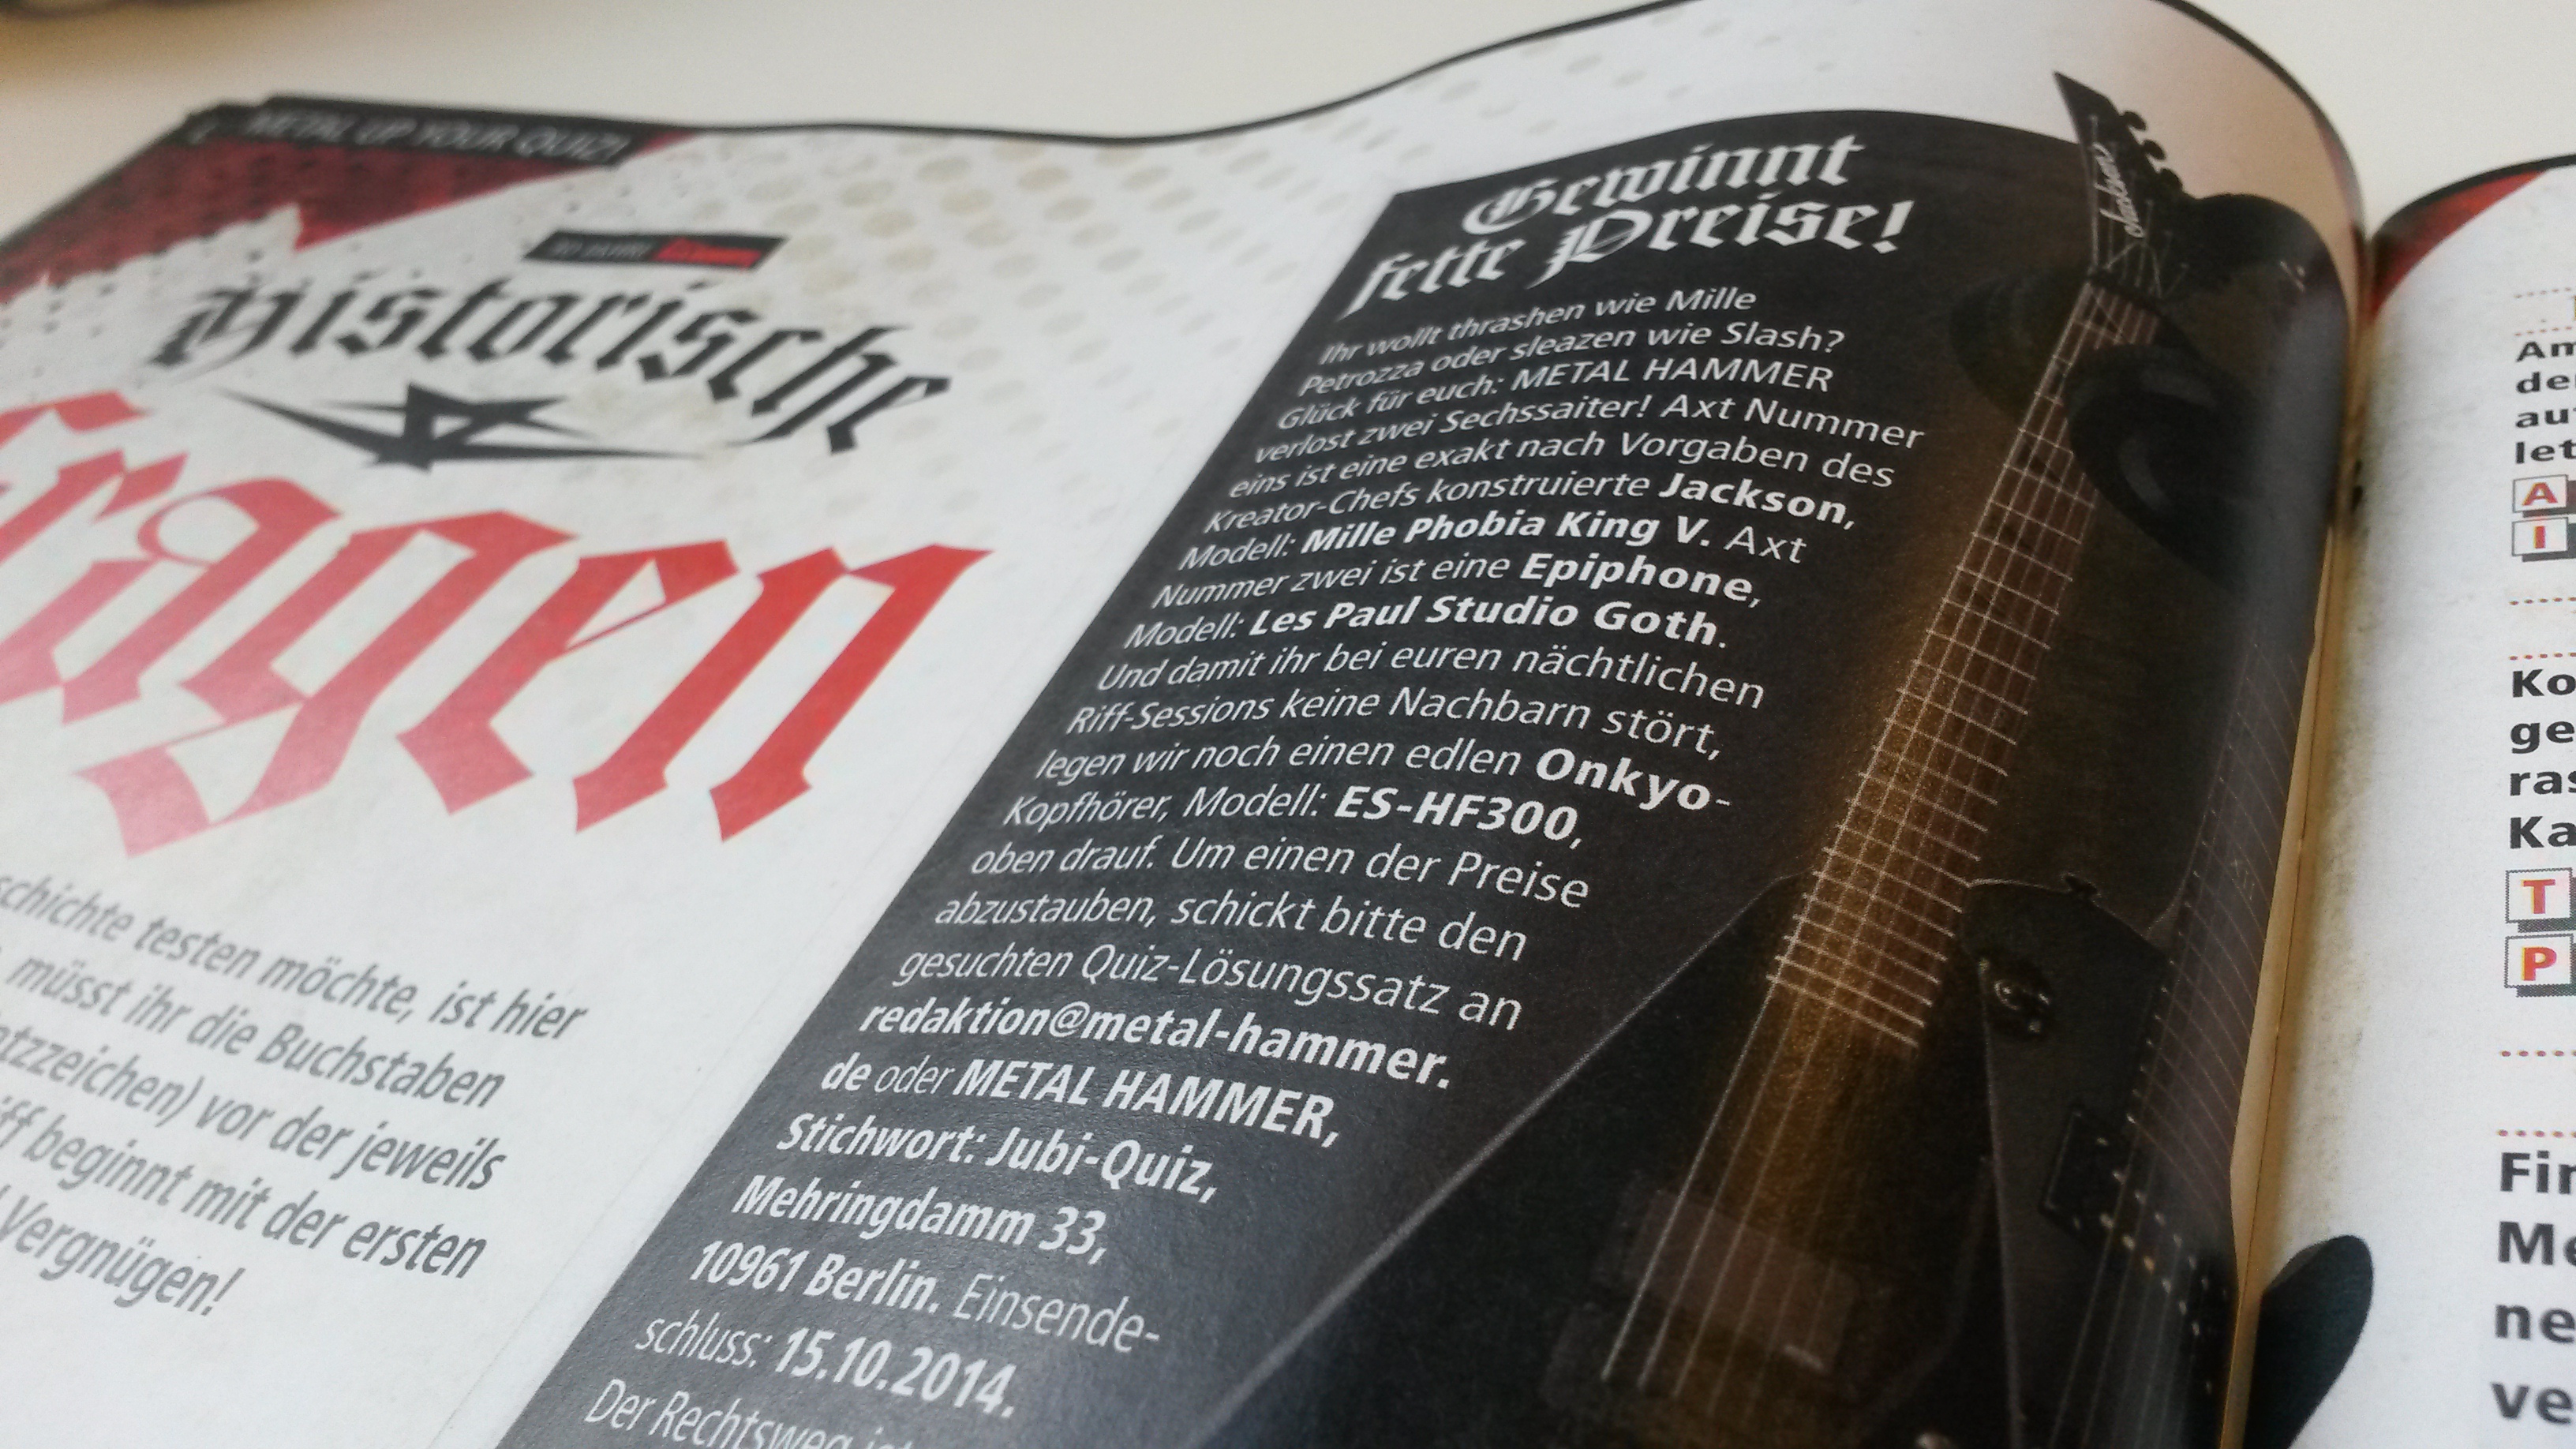 METAL HAMMER-Ausgabe Oktober 2014